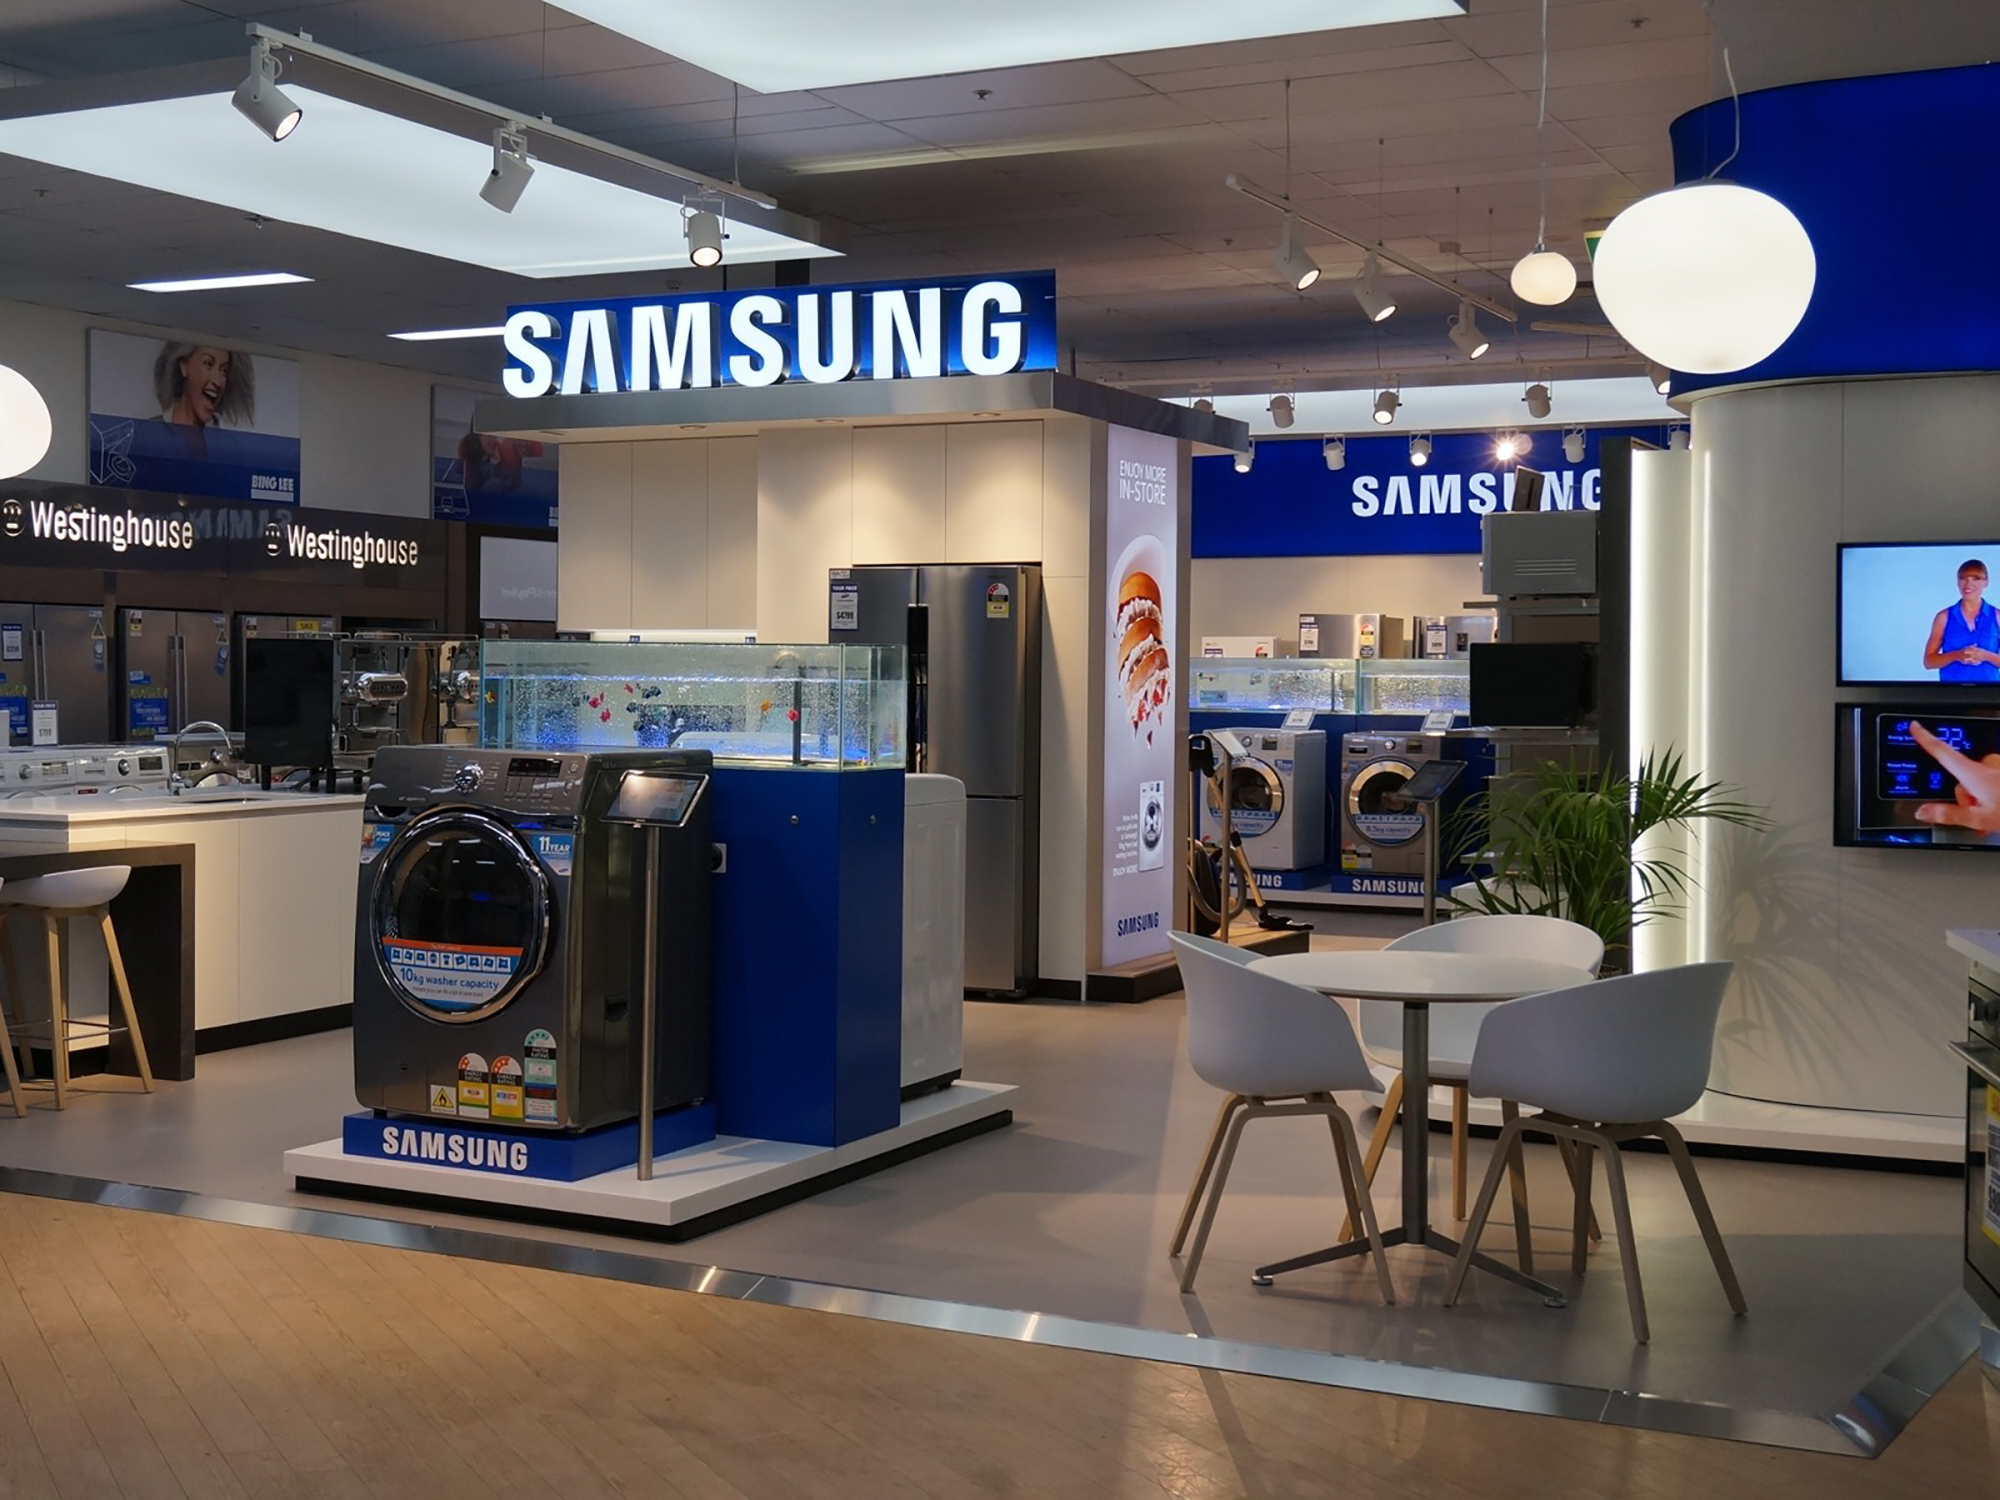 Samsung’s new smart fridge